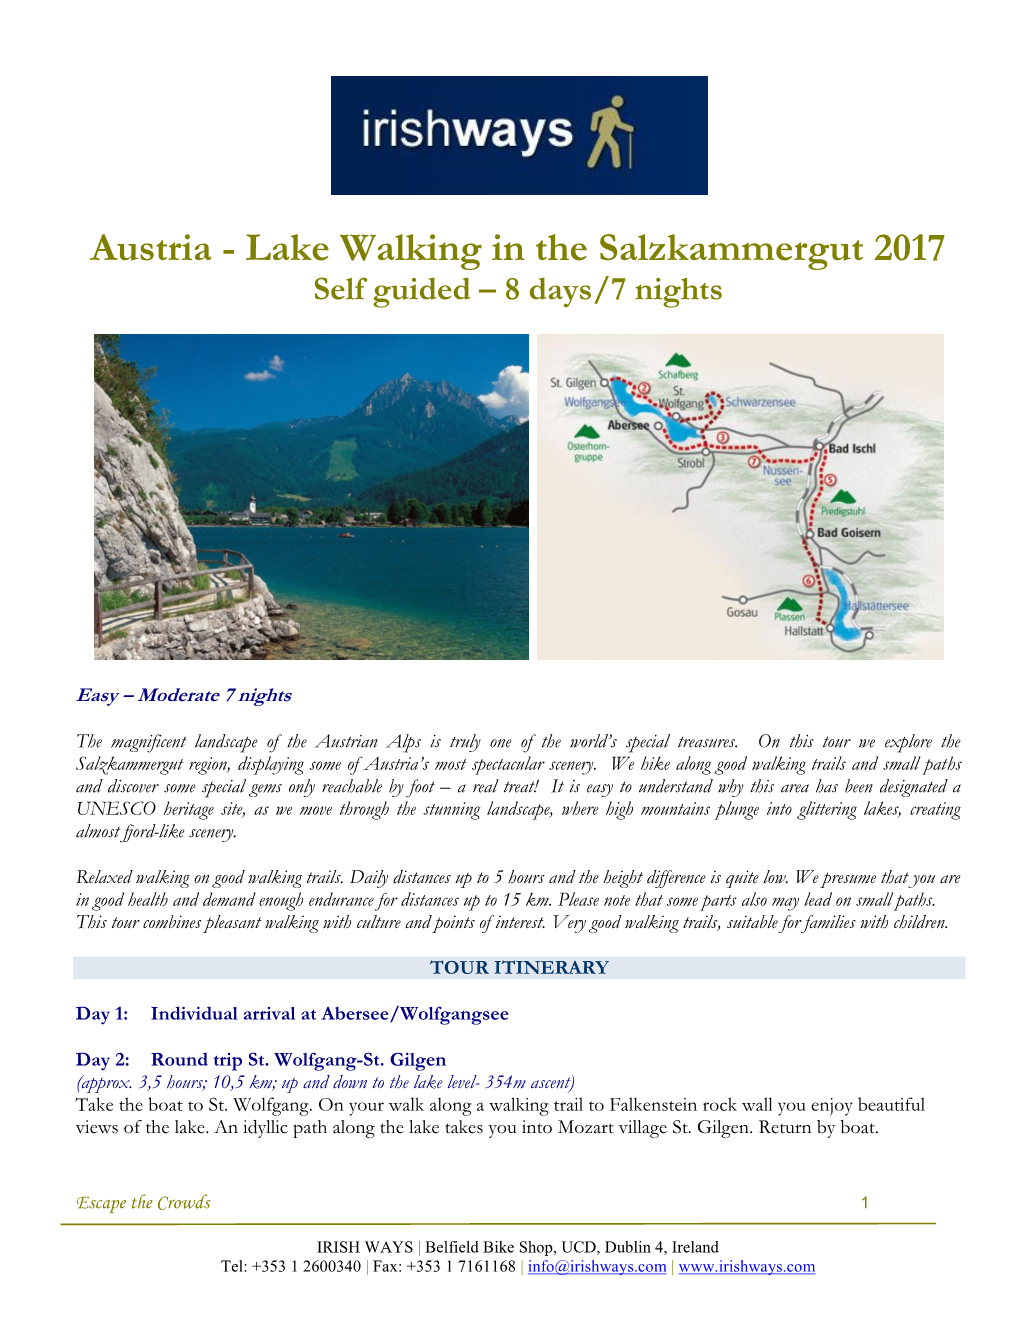 Austria - Lake Walking in the Salzkammergut 2017 Self Guided – 8 Days/7 Nights